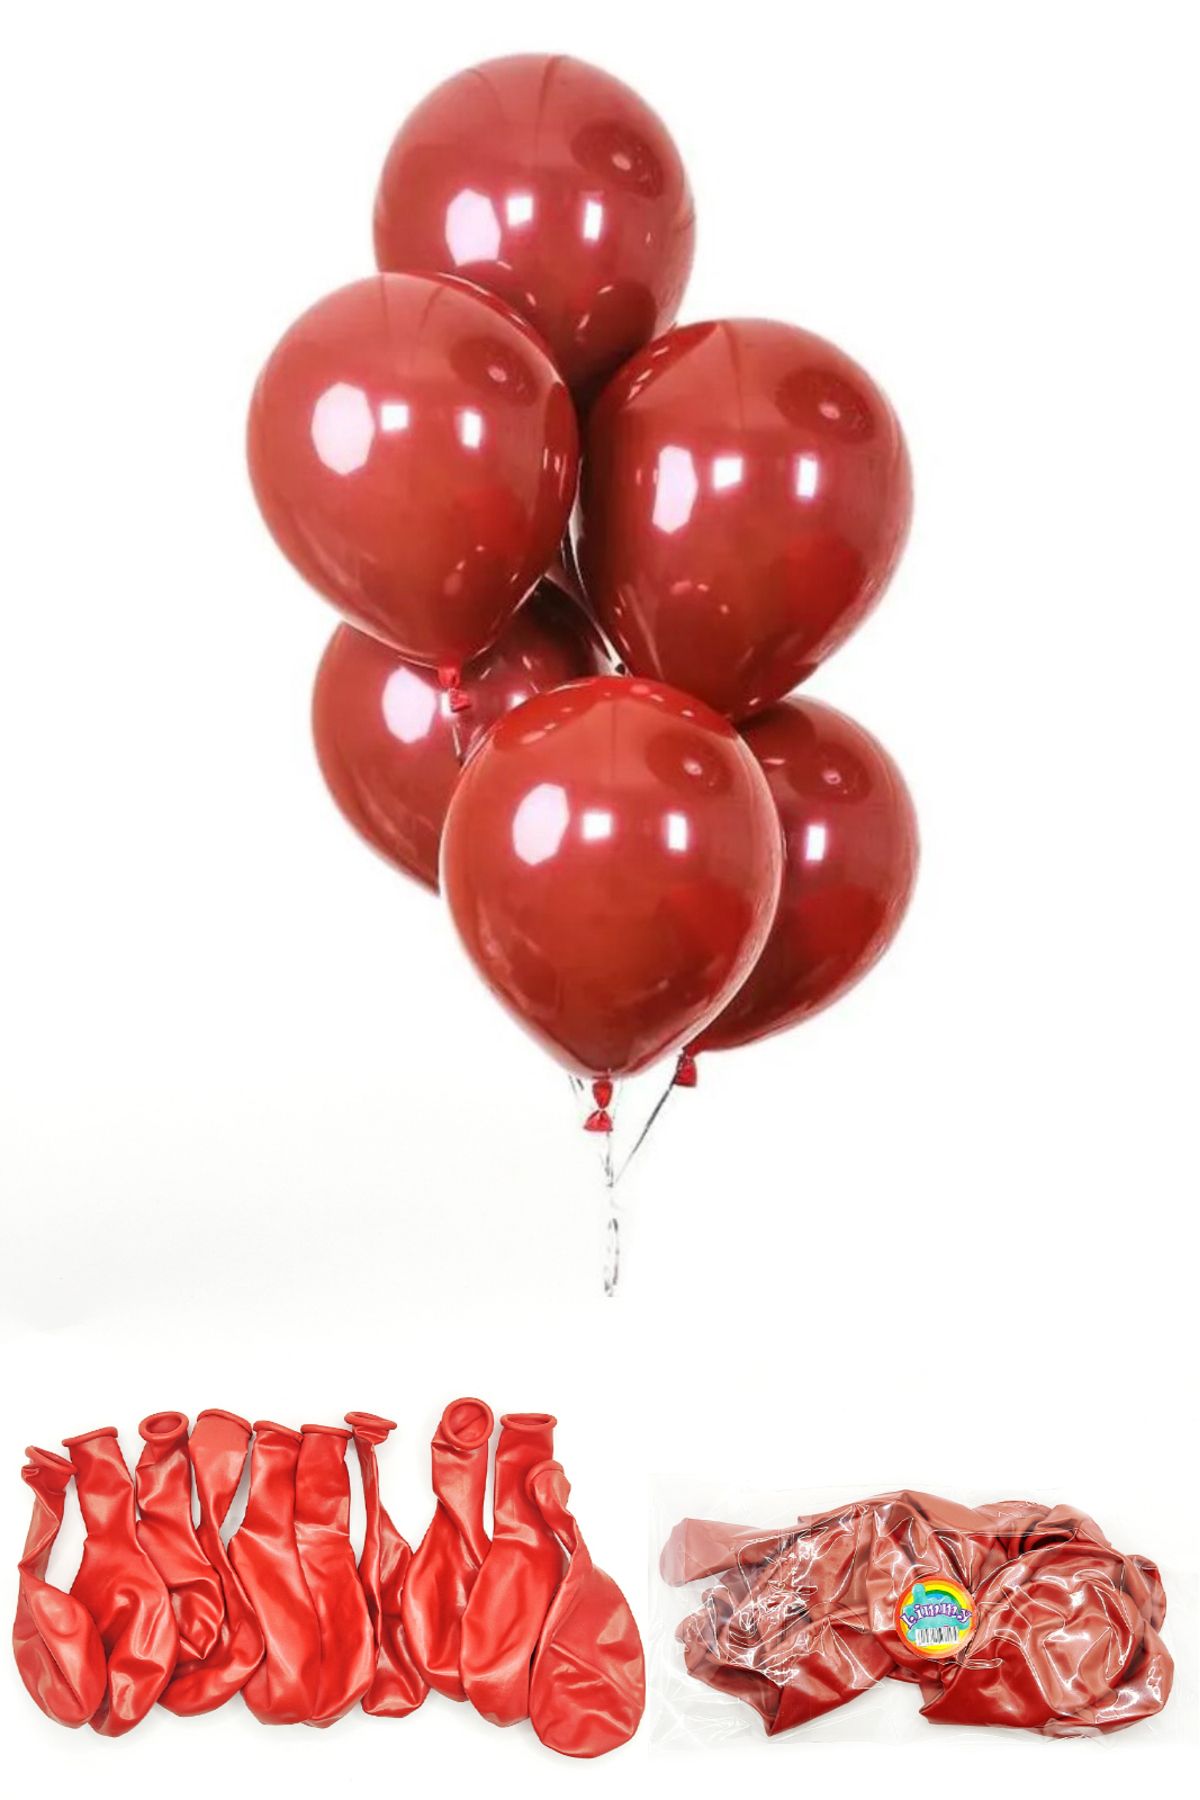 Limmy Metalik Balon Parlak Renkli 10'lu Paketli Balon 12 Inç - Kırmızı